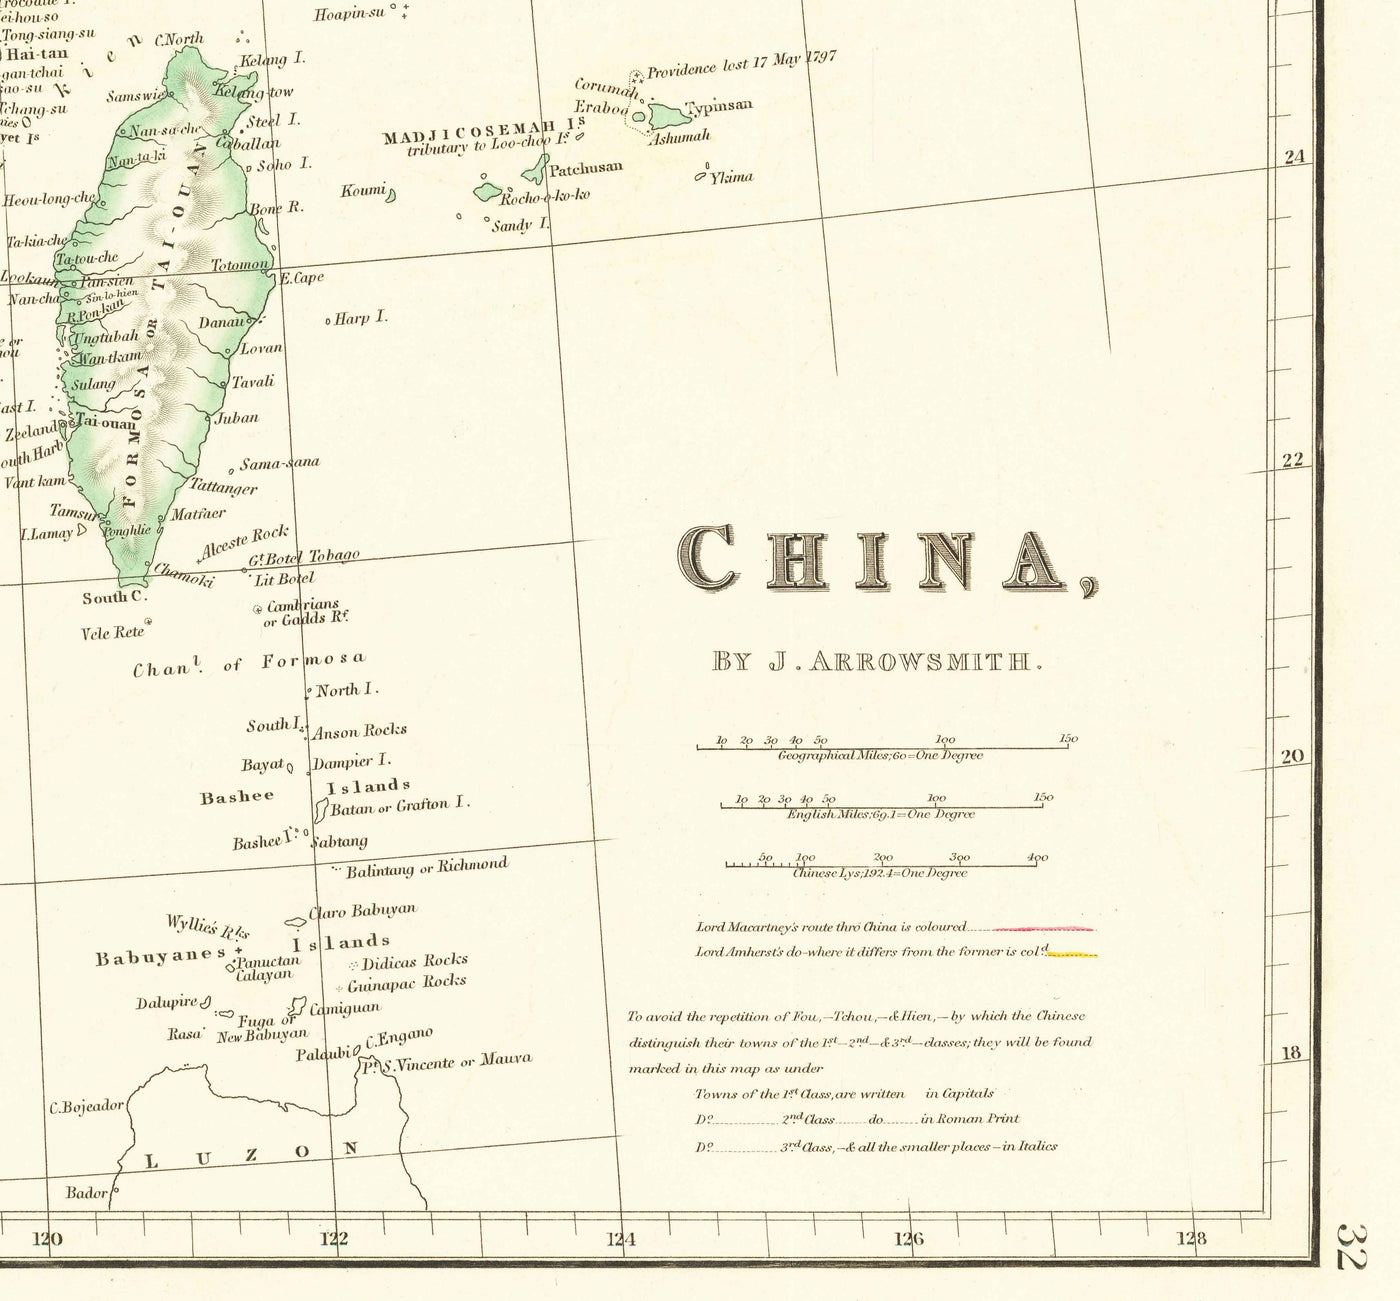 Ancienne carte de la Chine, 1840 par Arrowsmith - Corée, Canton, Pékin, ambassade sino-britannique Maccartney, empereur Qianlong